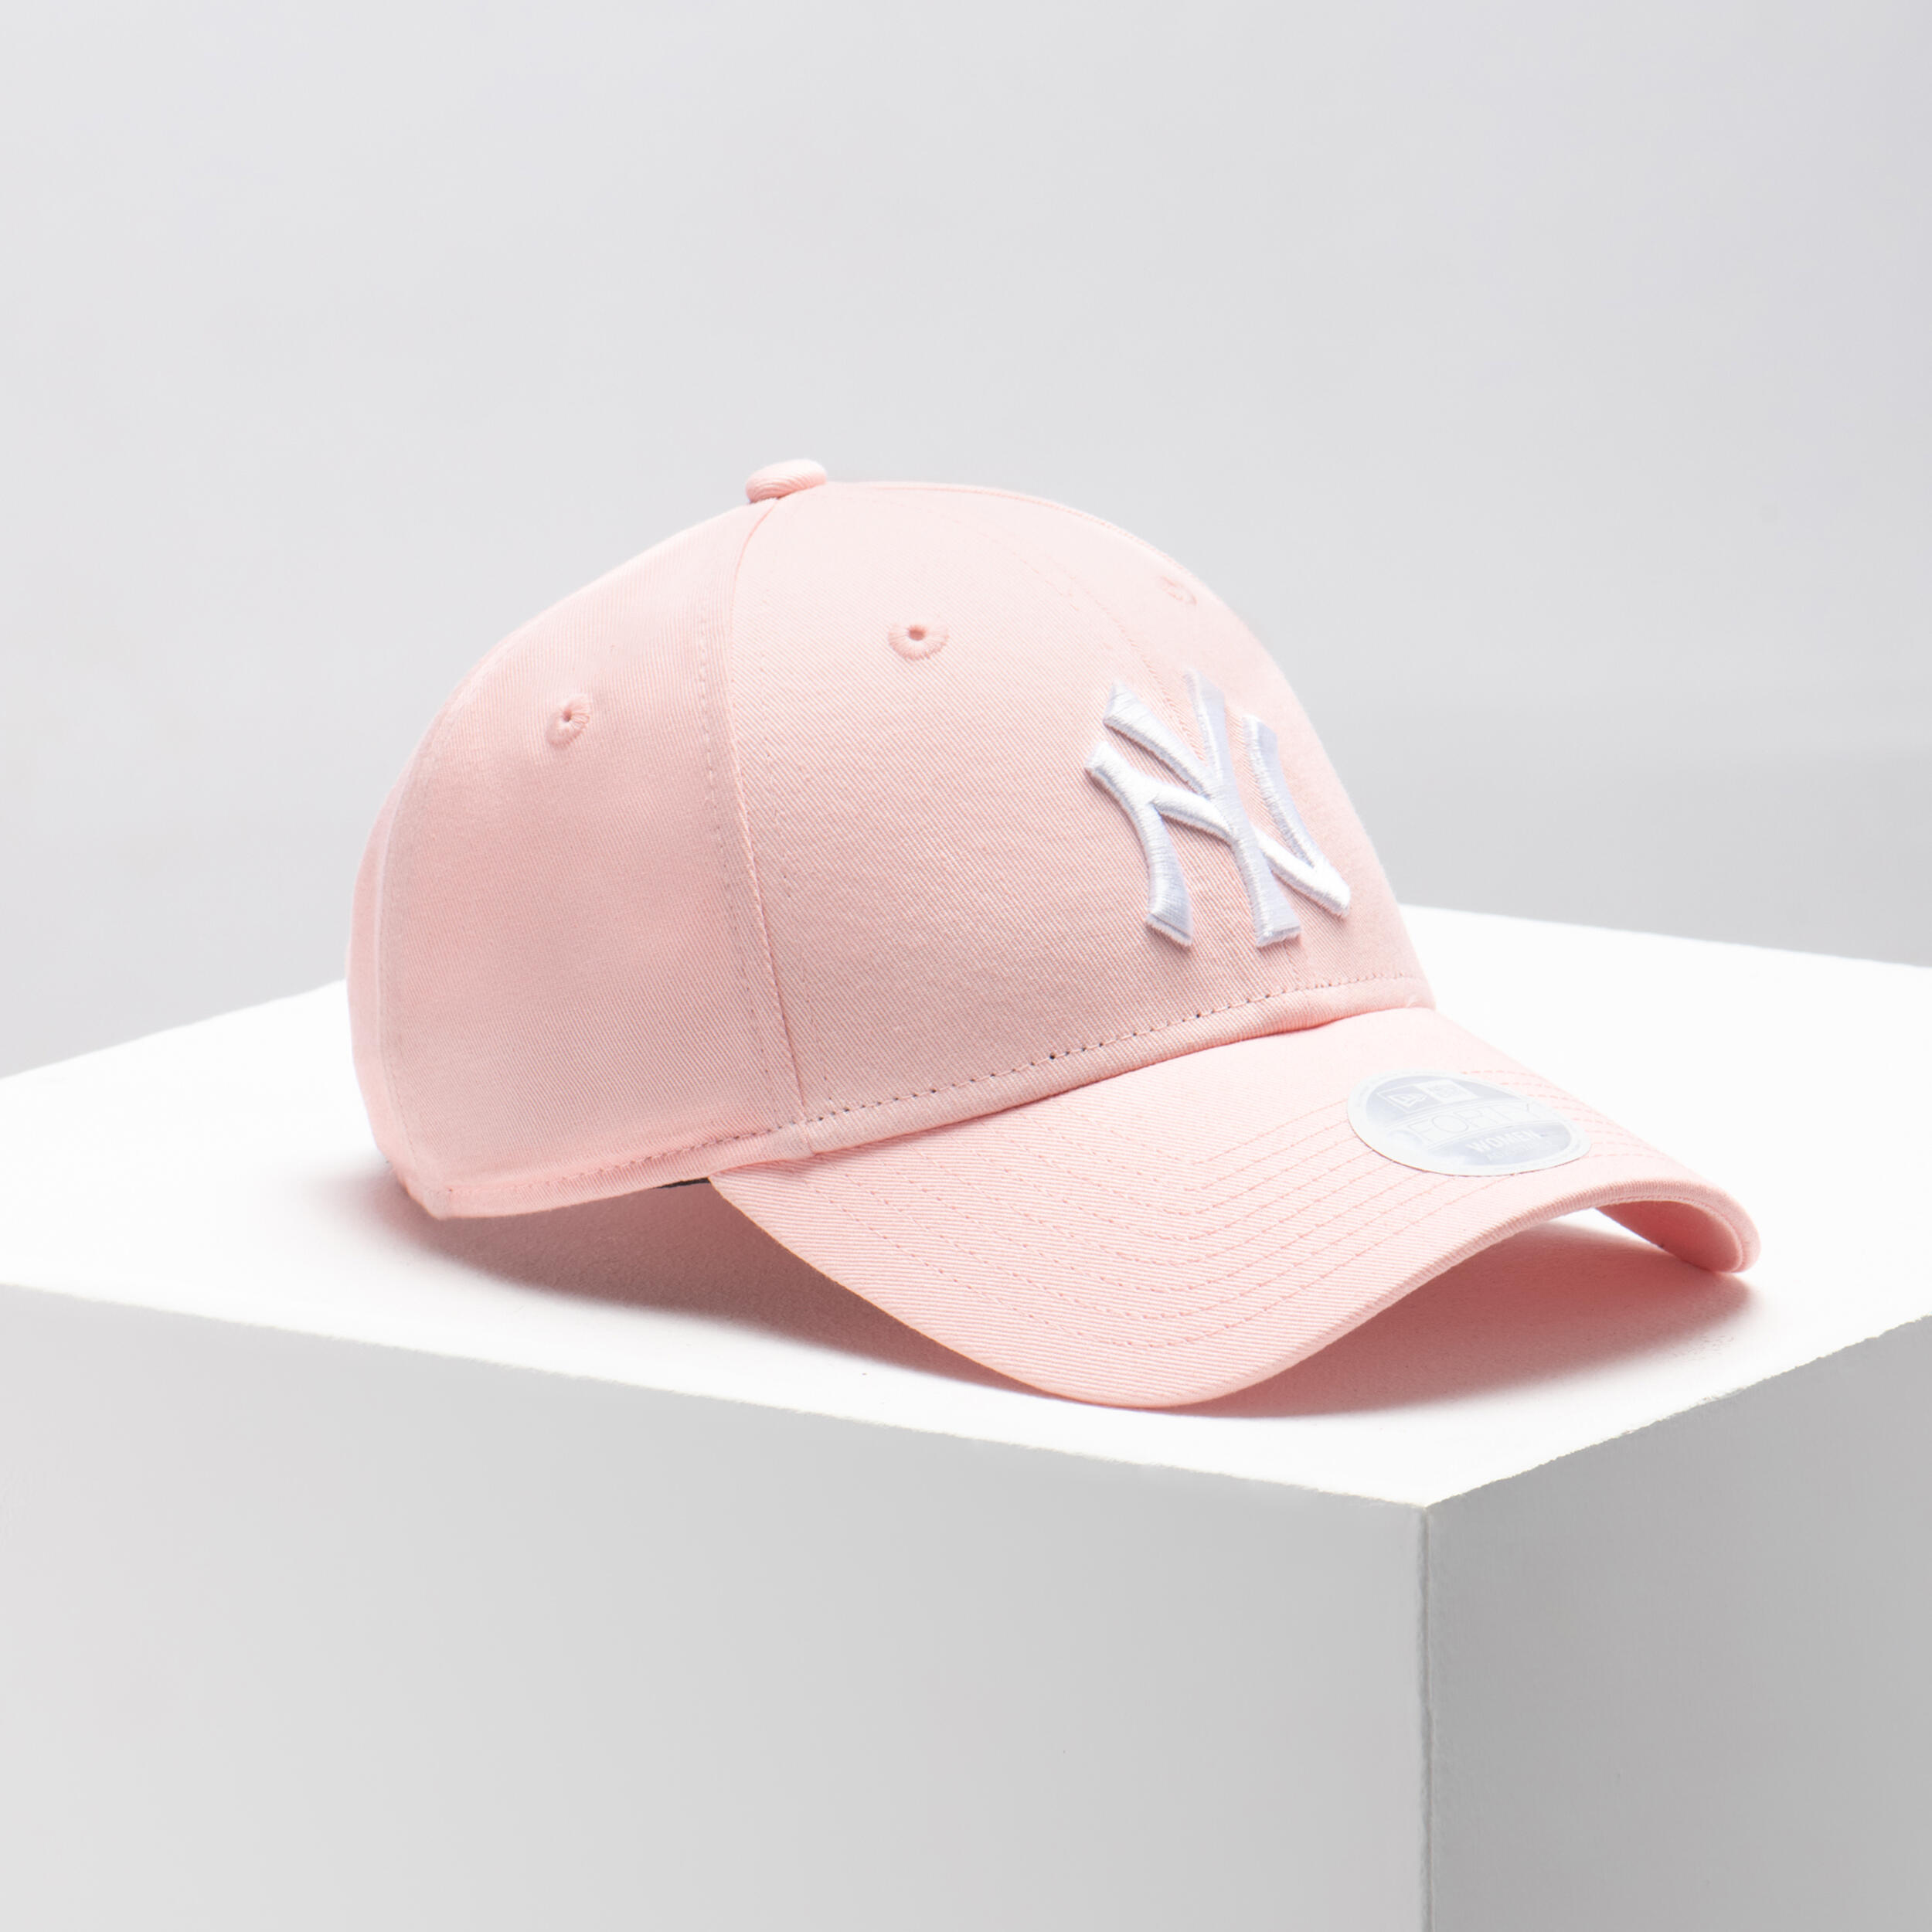 Men's / Women's MLB Baseball Cap New York Yankees - Pink 2/8